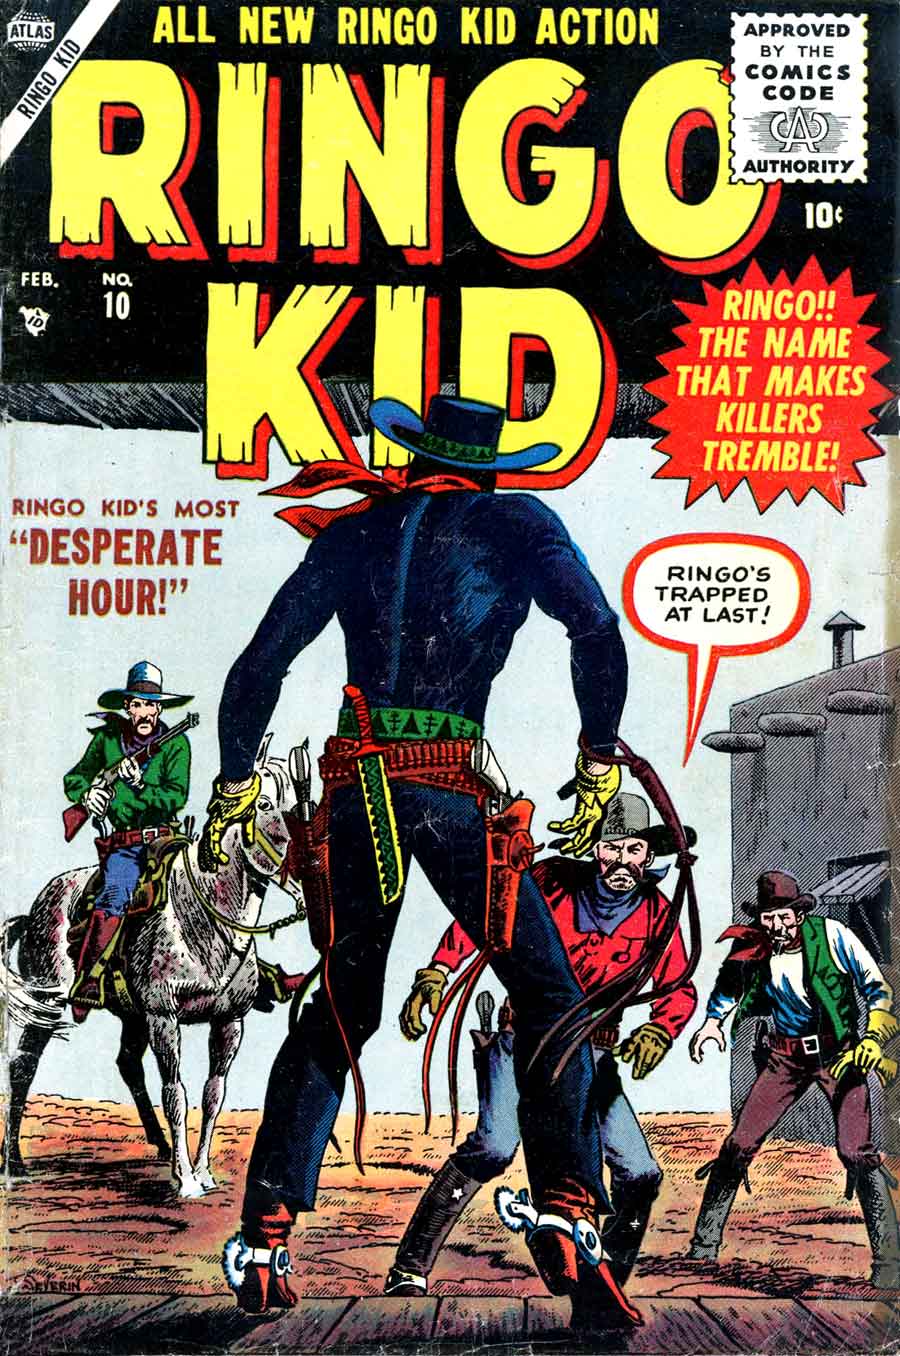 Rawhide Kid #10 golden age atlas western1950s comic book cover